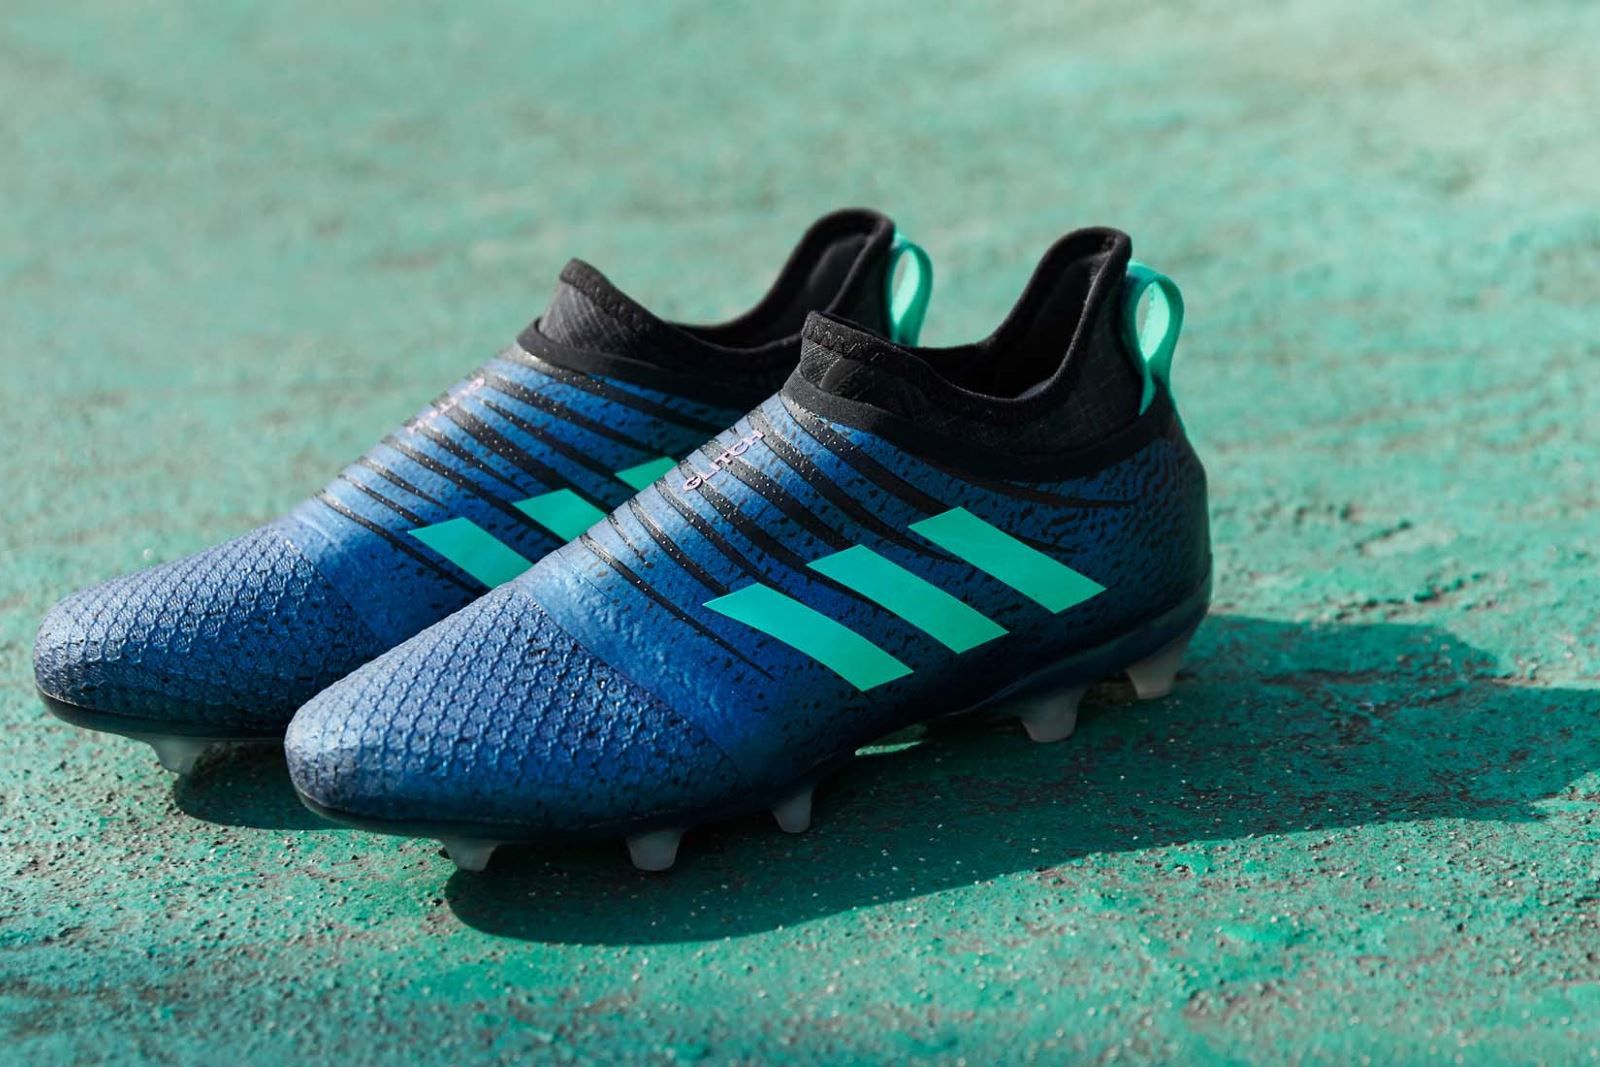 danés Leia Terminología We speak to the designer of Adidas' interchangeable skin football boots